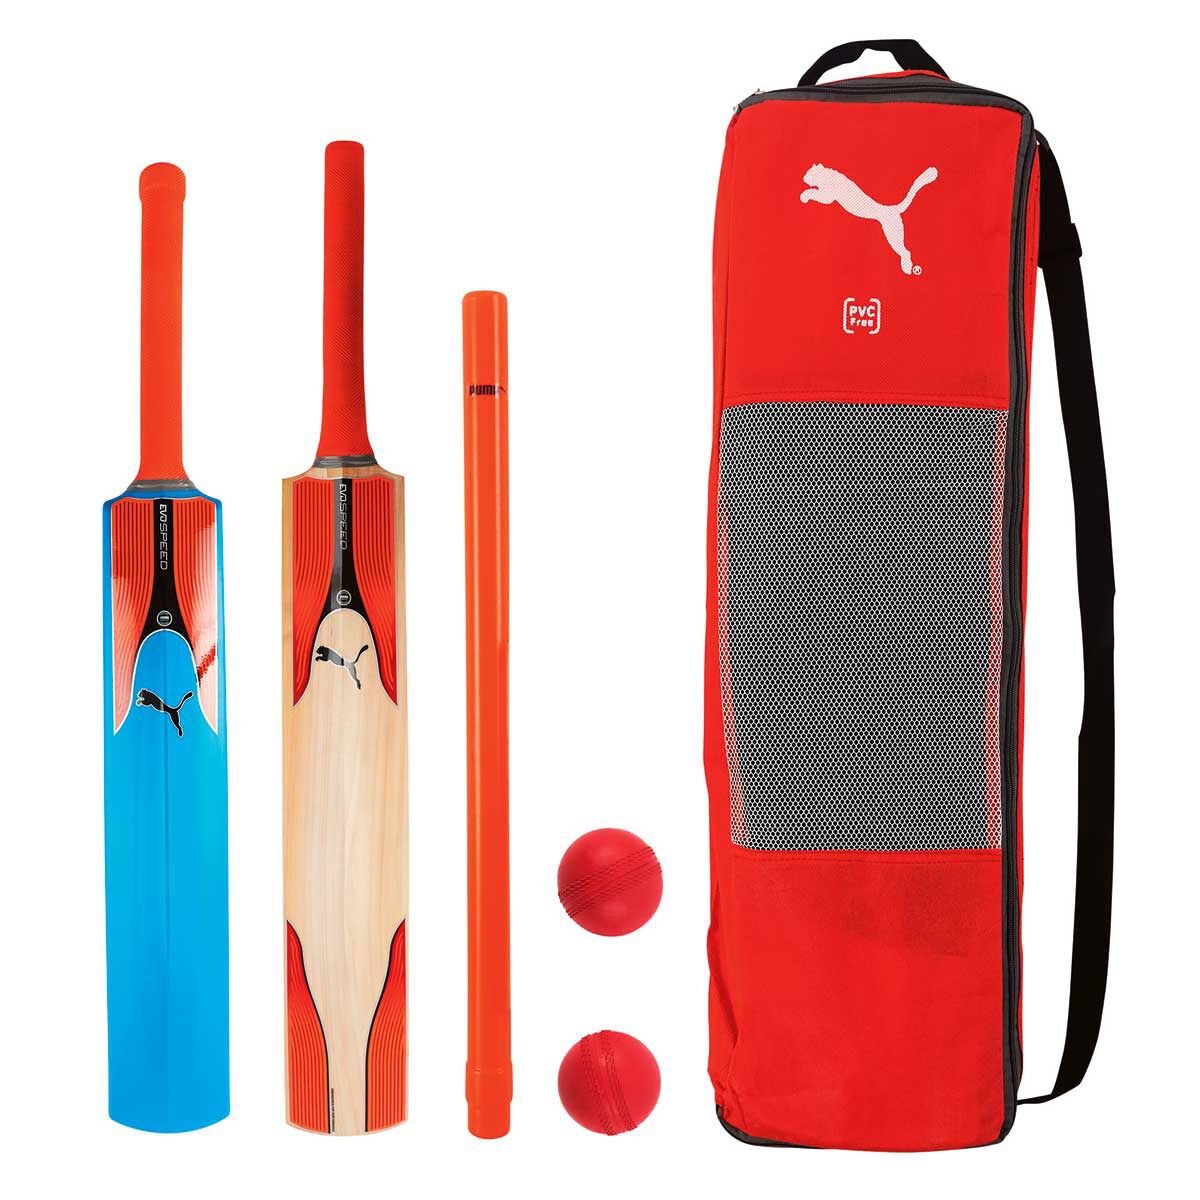 puma evospeed 6 cricket bat